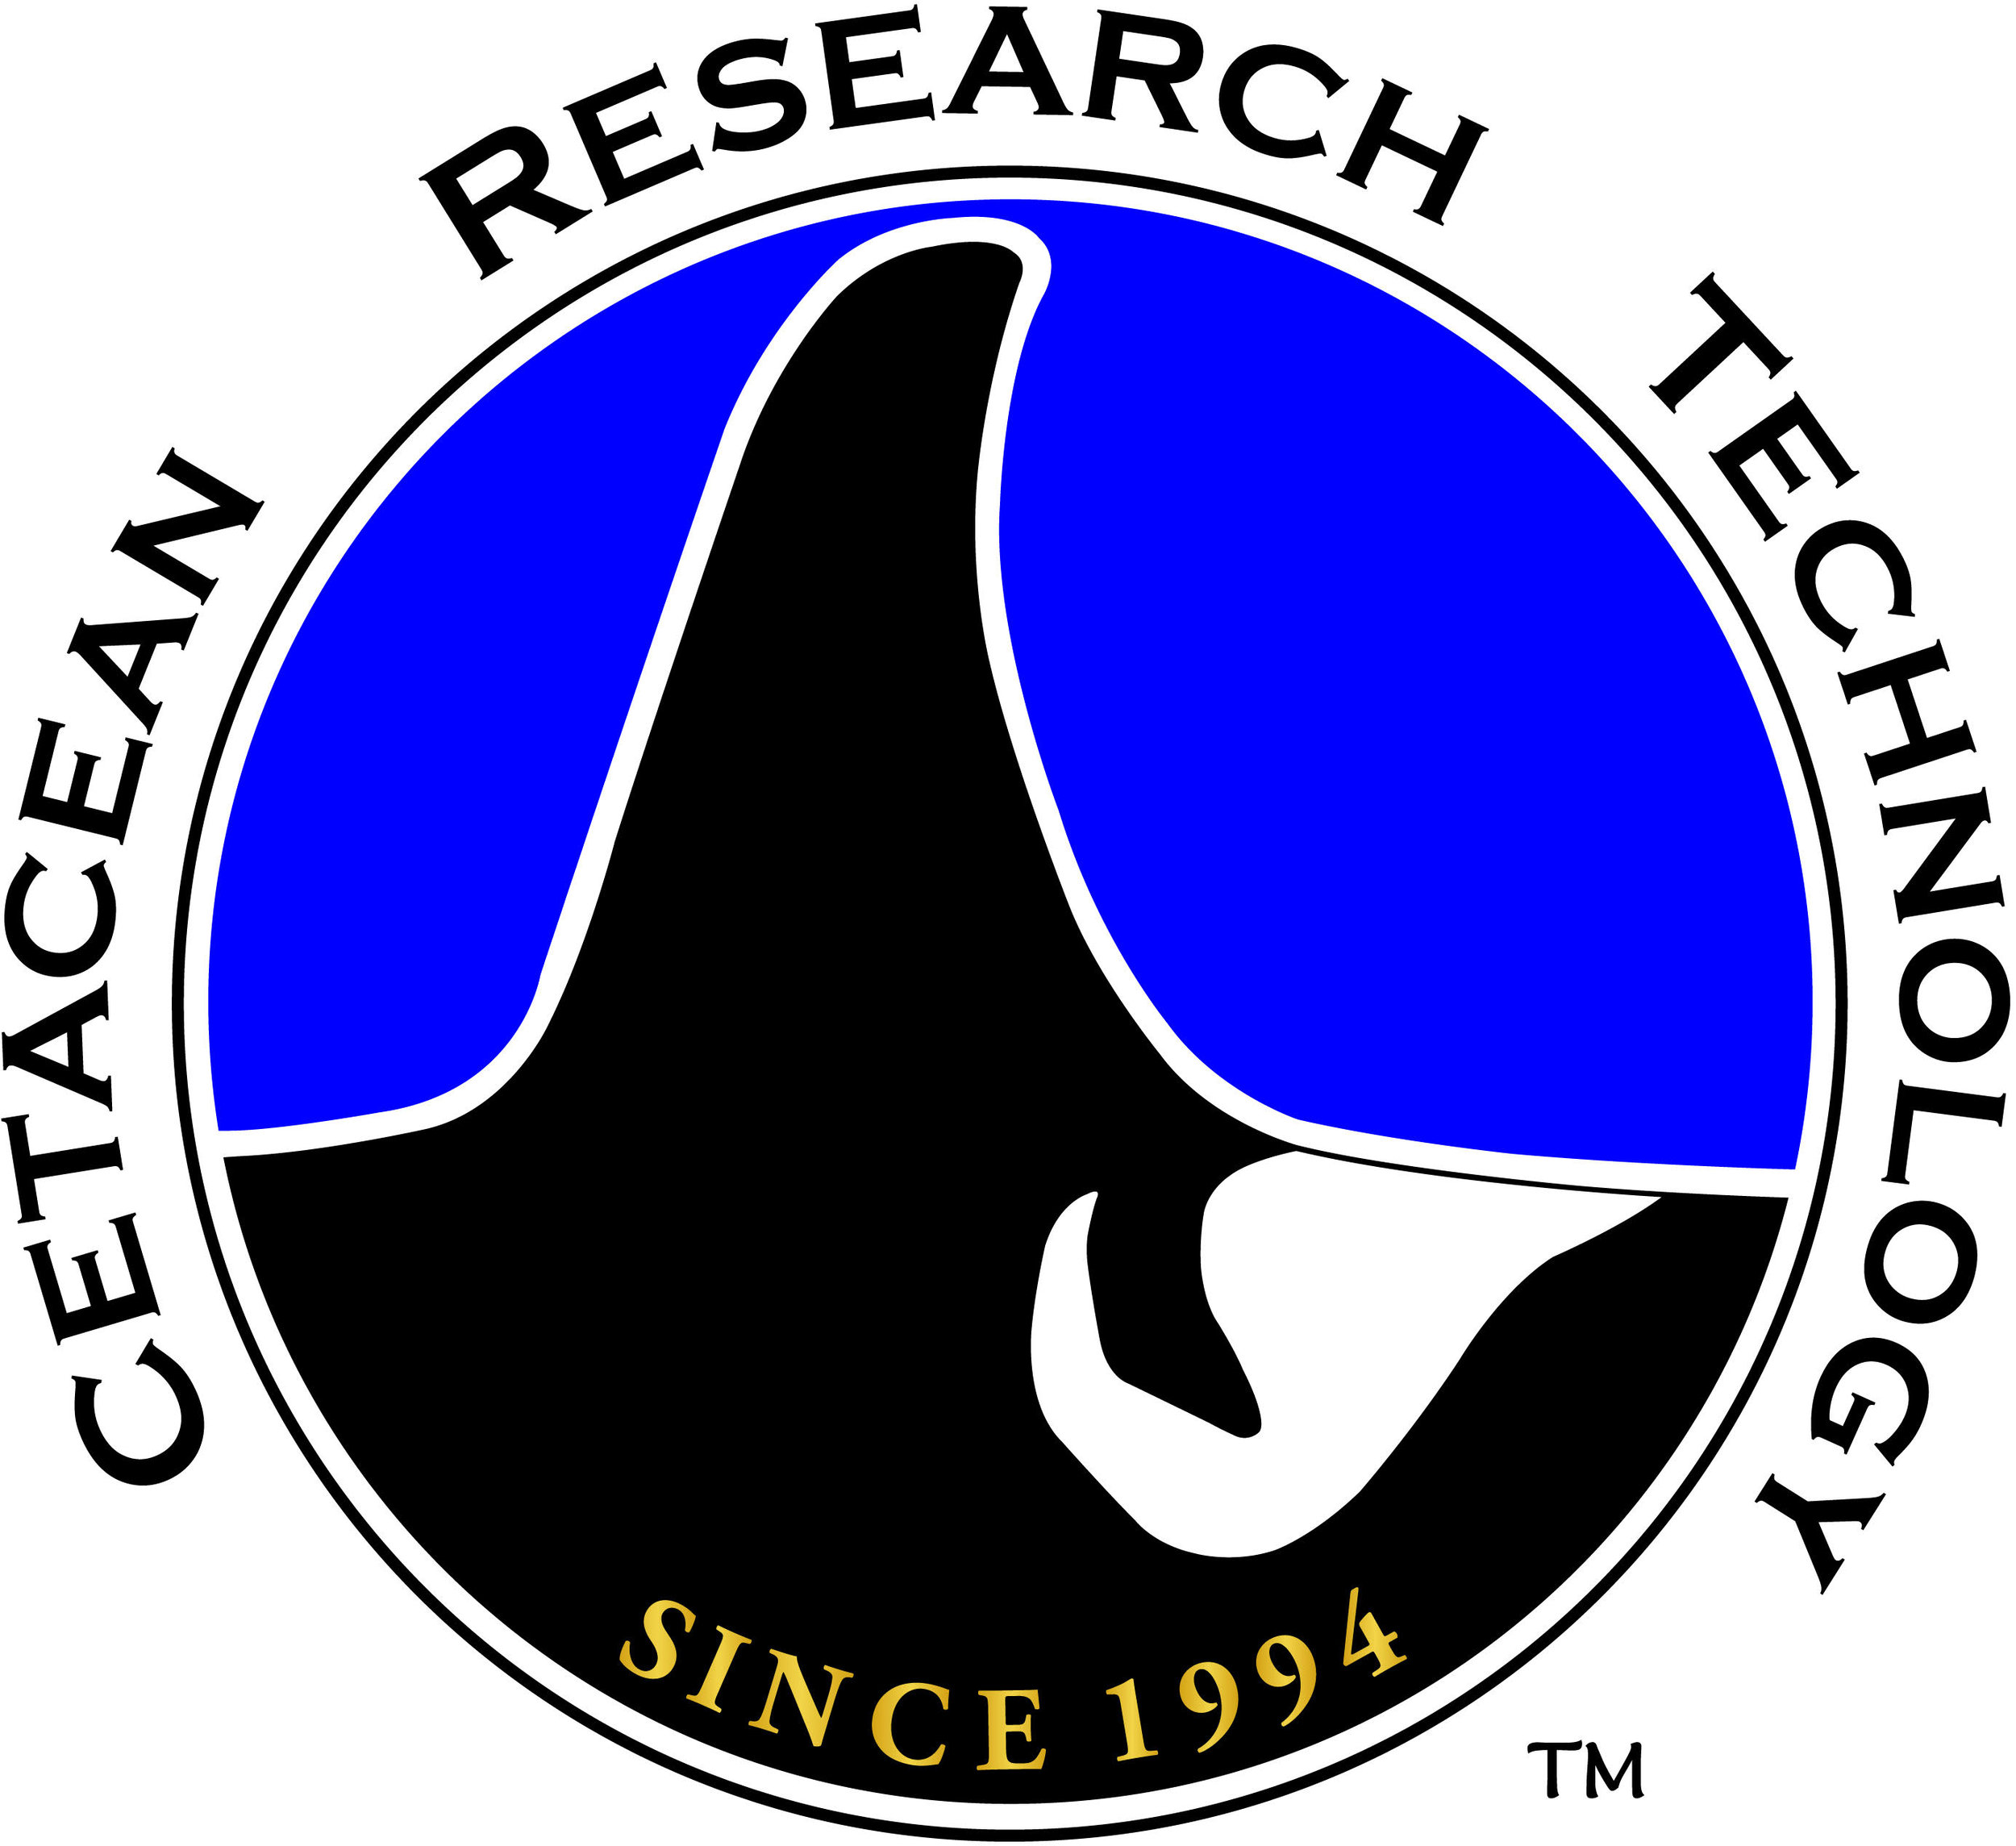 Cetacean Research Technology logo.jpg